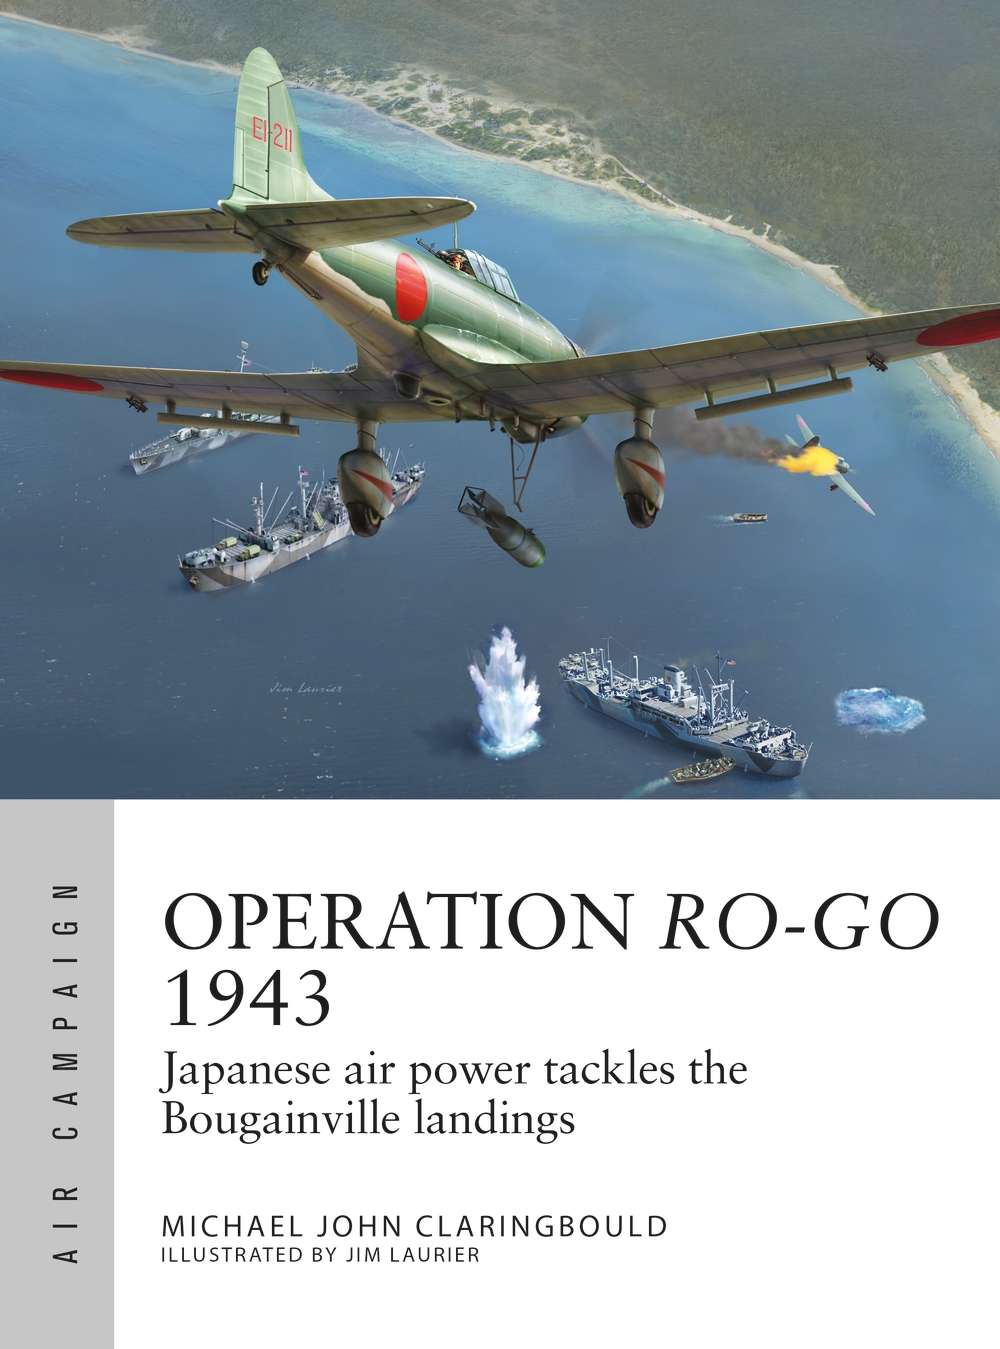 Operation Ro-Go 1943 book jacket